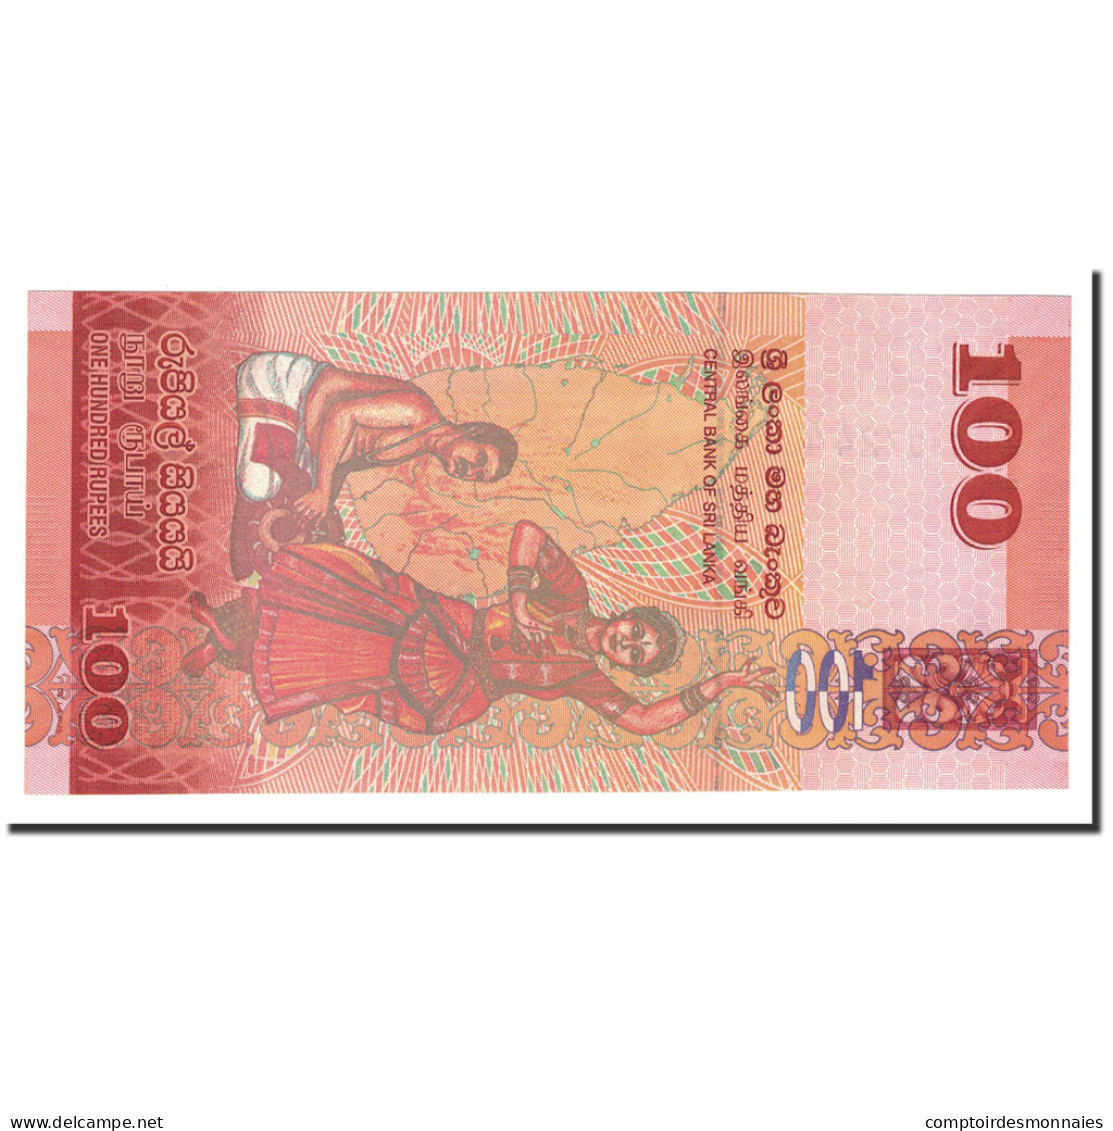 Billet, Sri Lanka, 100 Rupees, 2010, 2010-01-01, KM:125a, NEUF - Sri Lanka